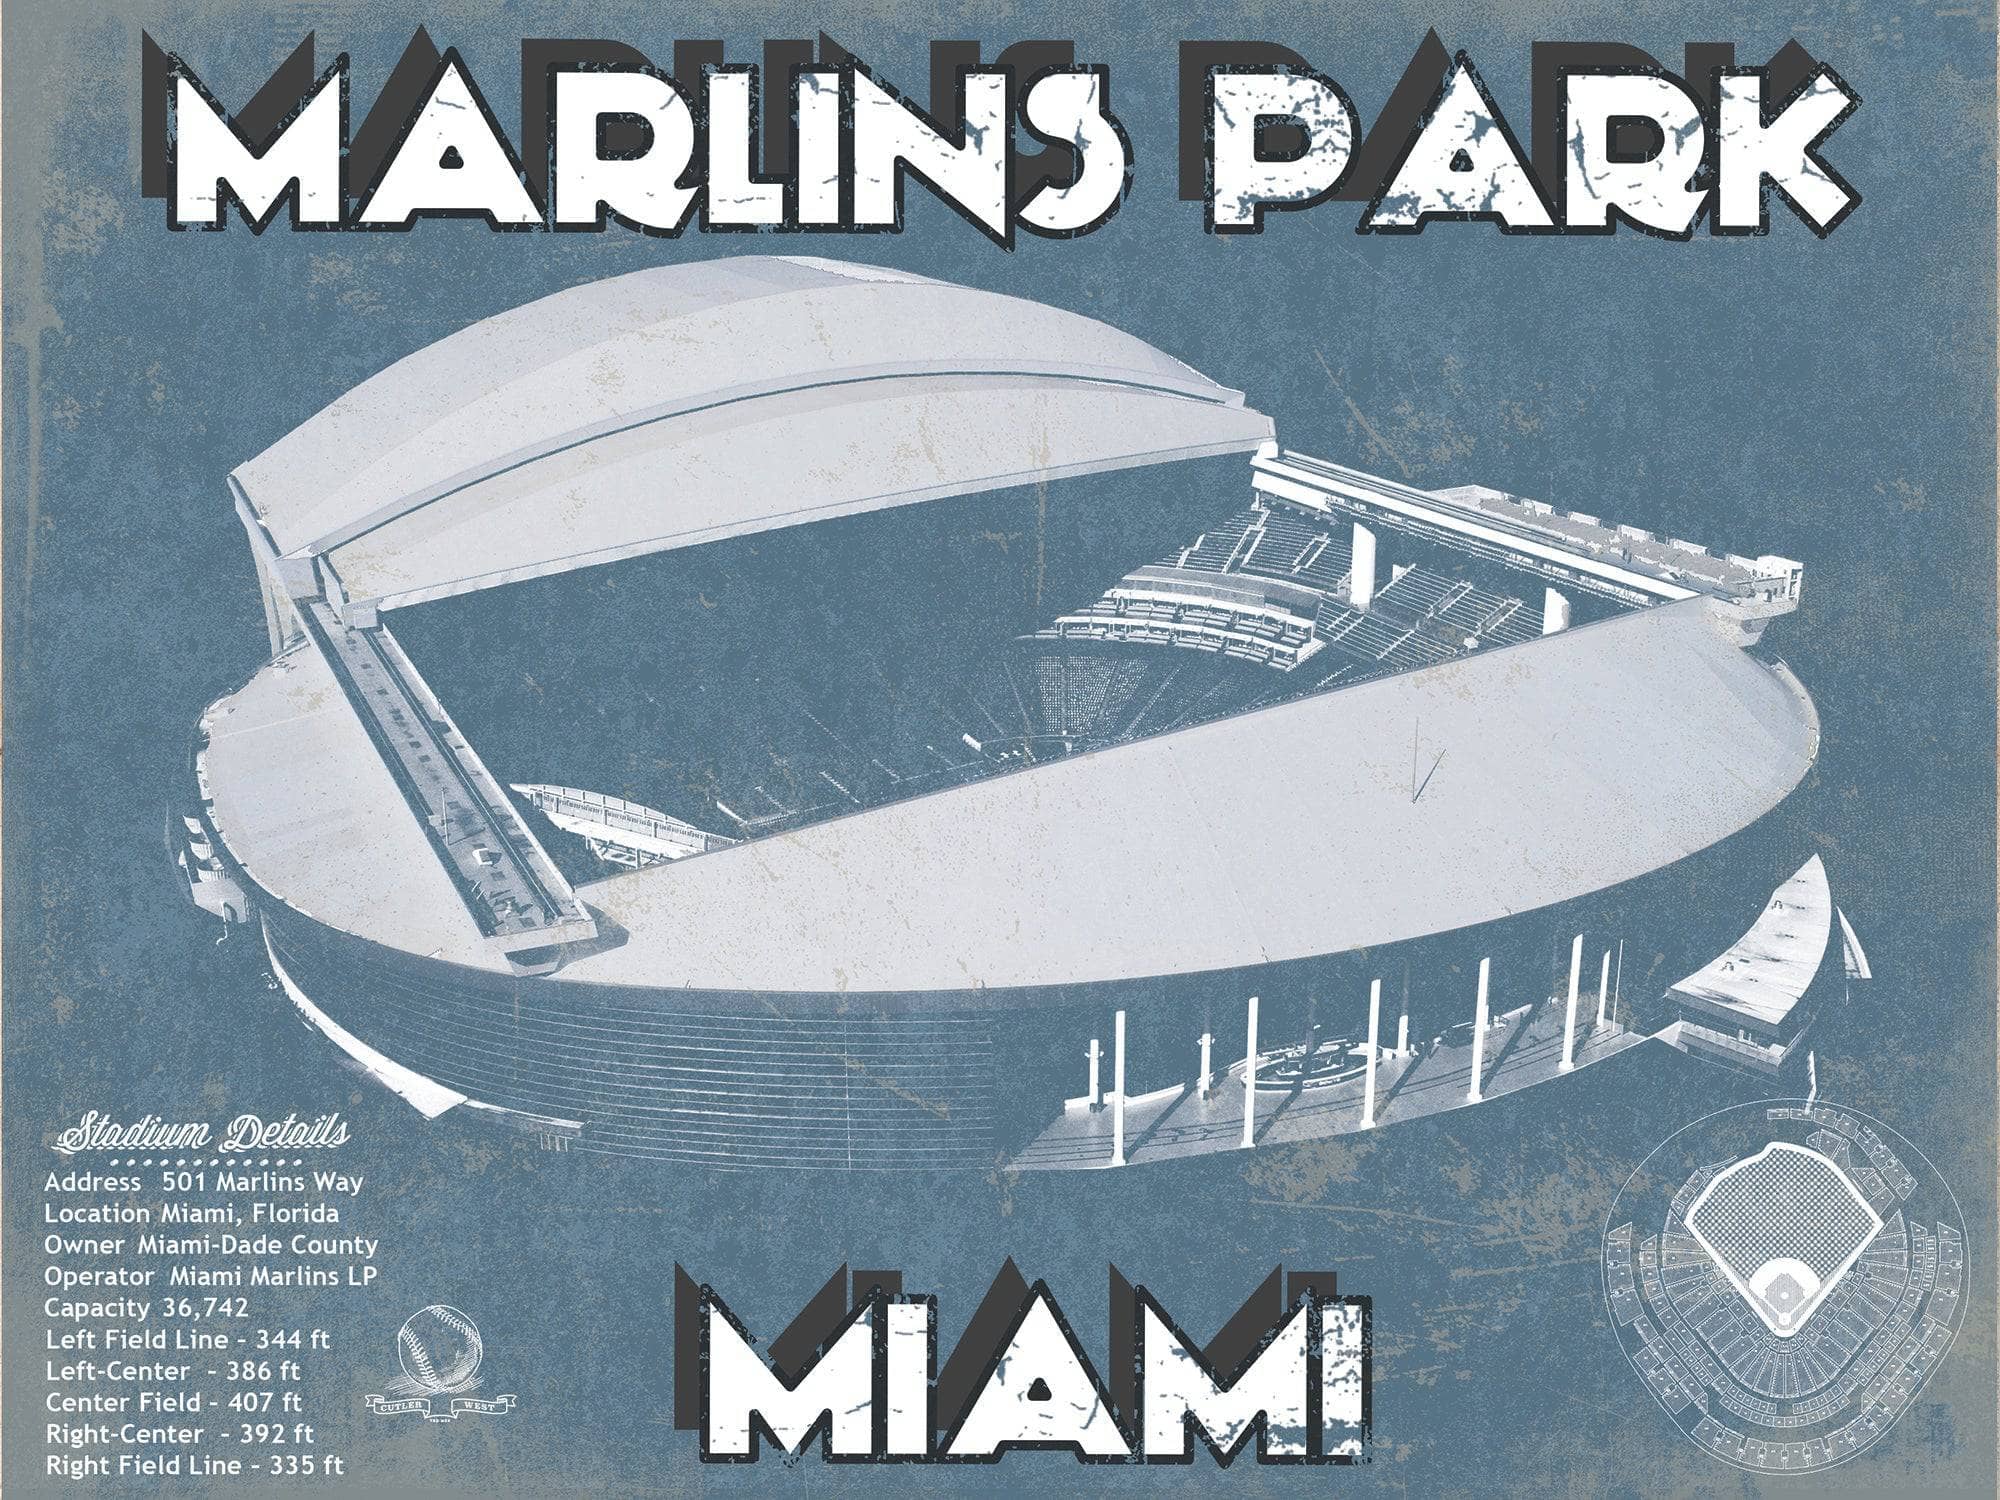 Cutler West Baseball Collection 14" x 11" / Unframed Miami Marlins - Marlins Park Vintage Baseball Fan Print 718123457_73529